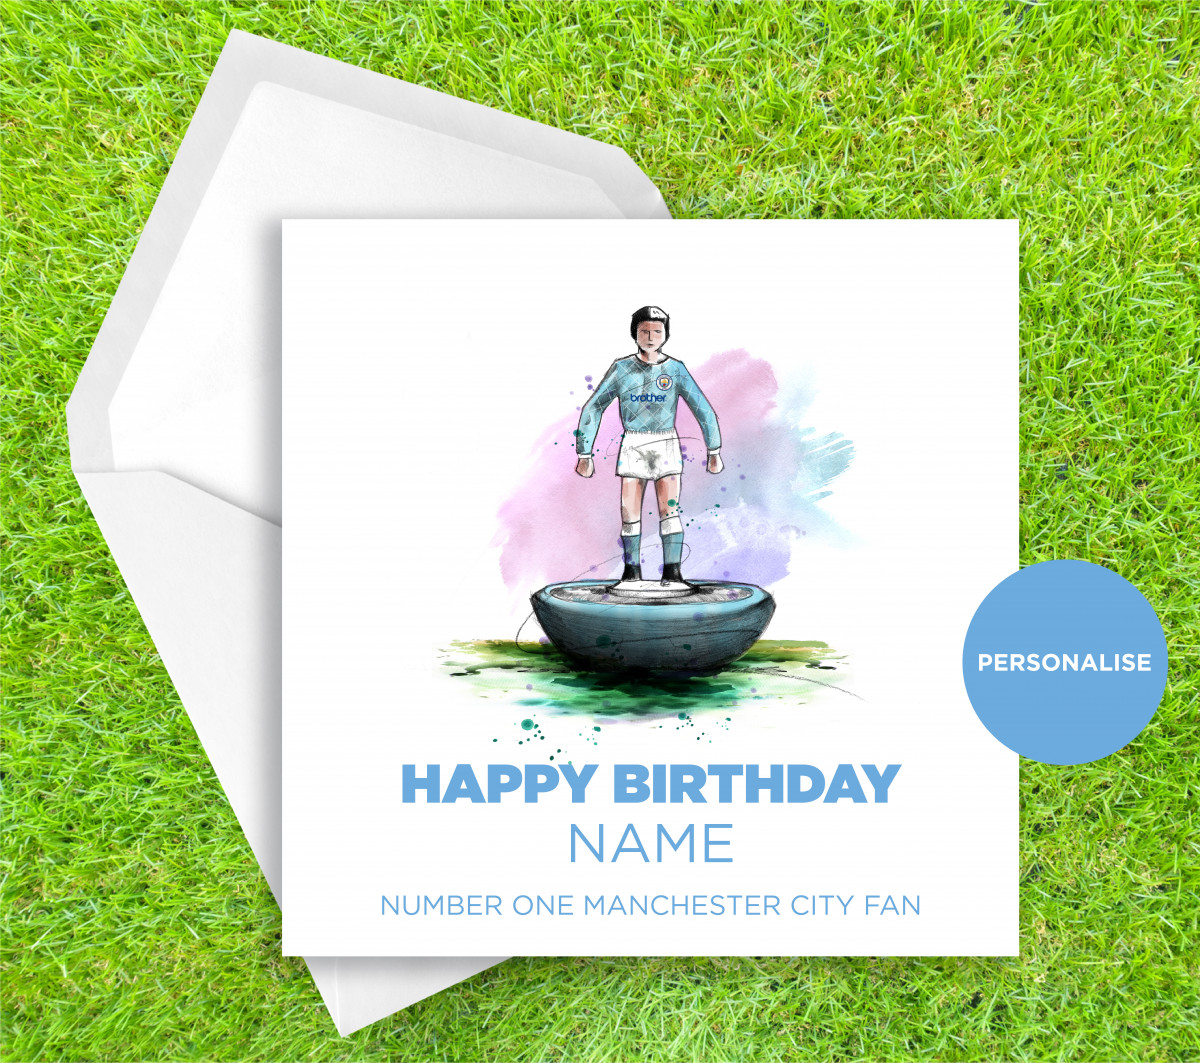 Manchester City, Subbuteo, personalised birthday card